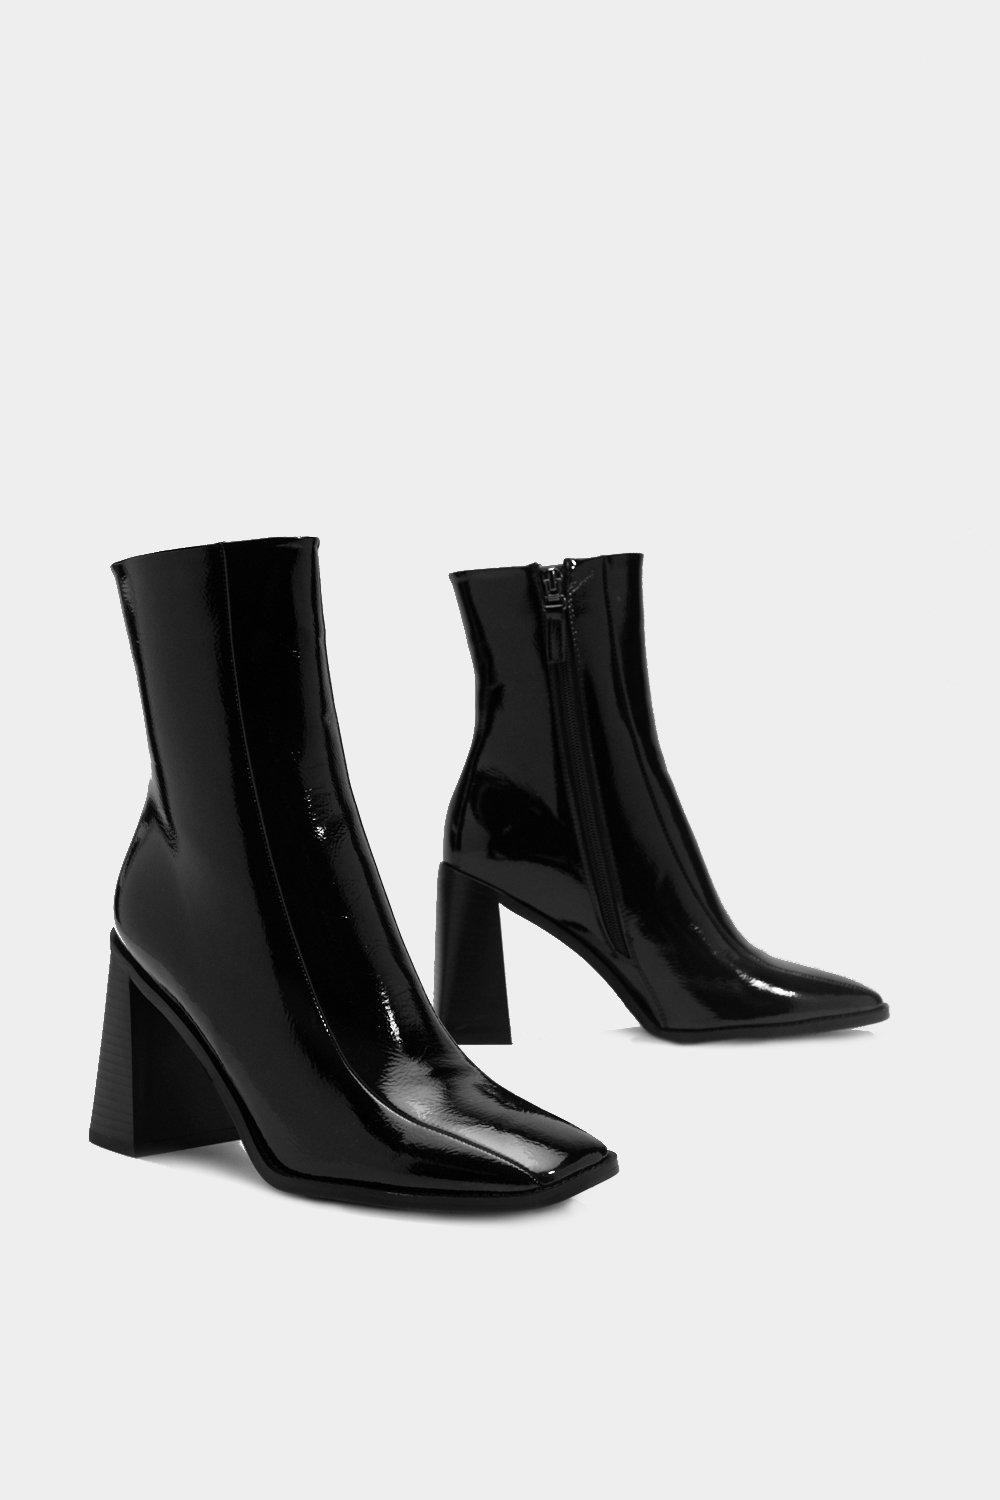 debenhams ankle boots black